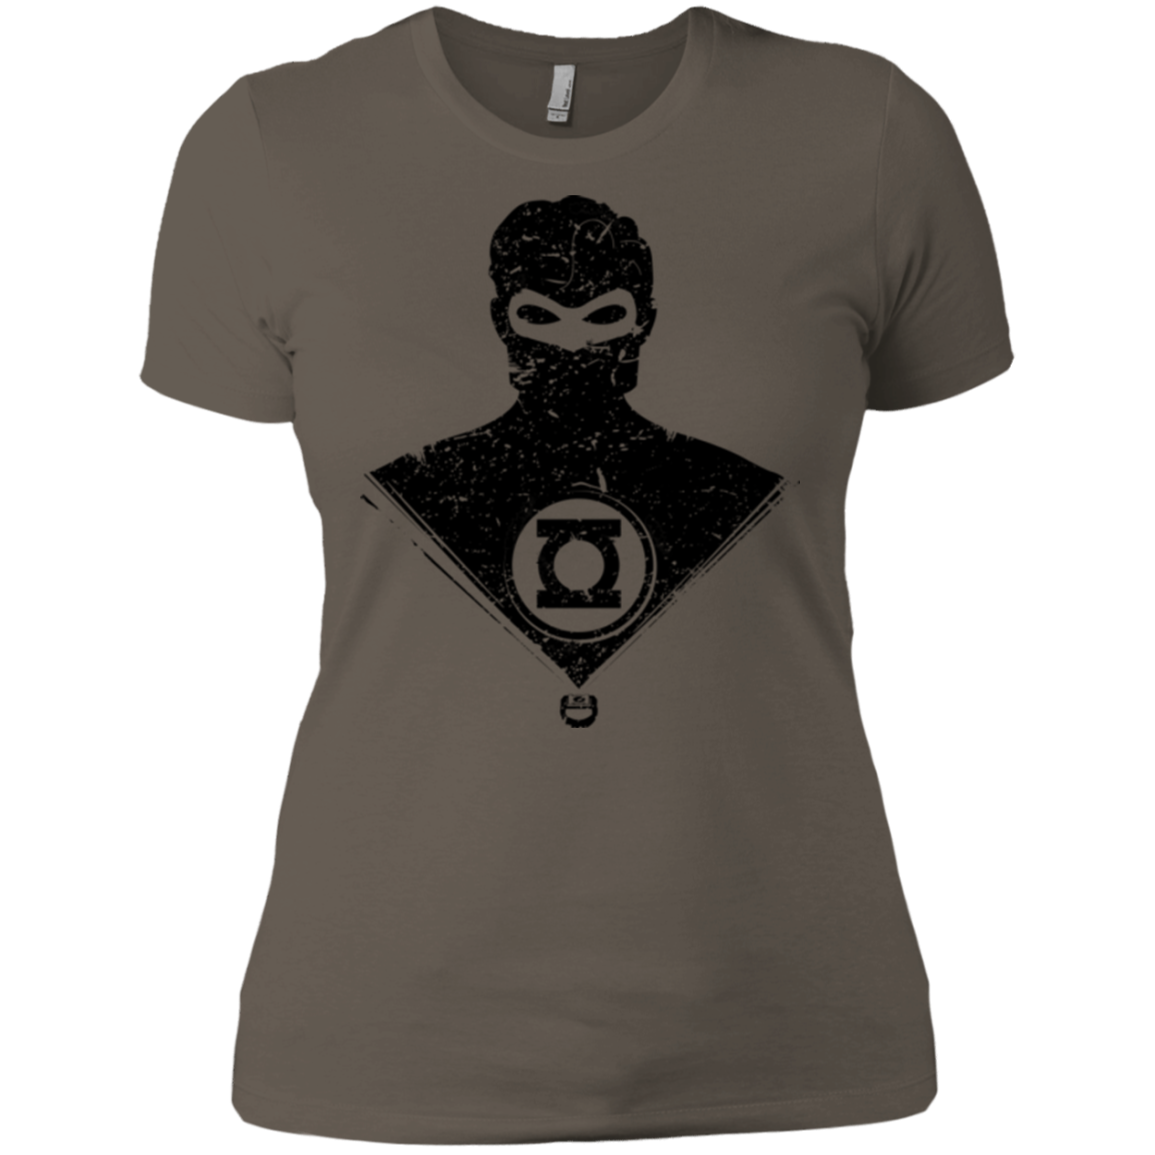 Ring Shadow Women's Premium T-Shirt